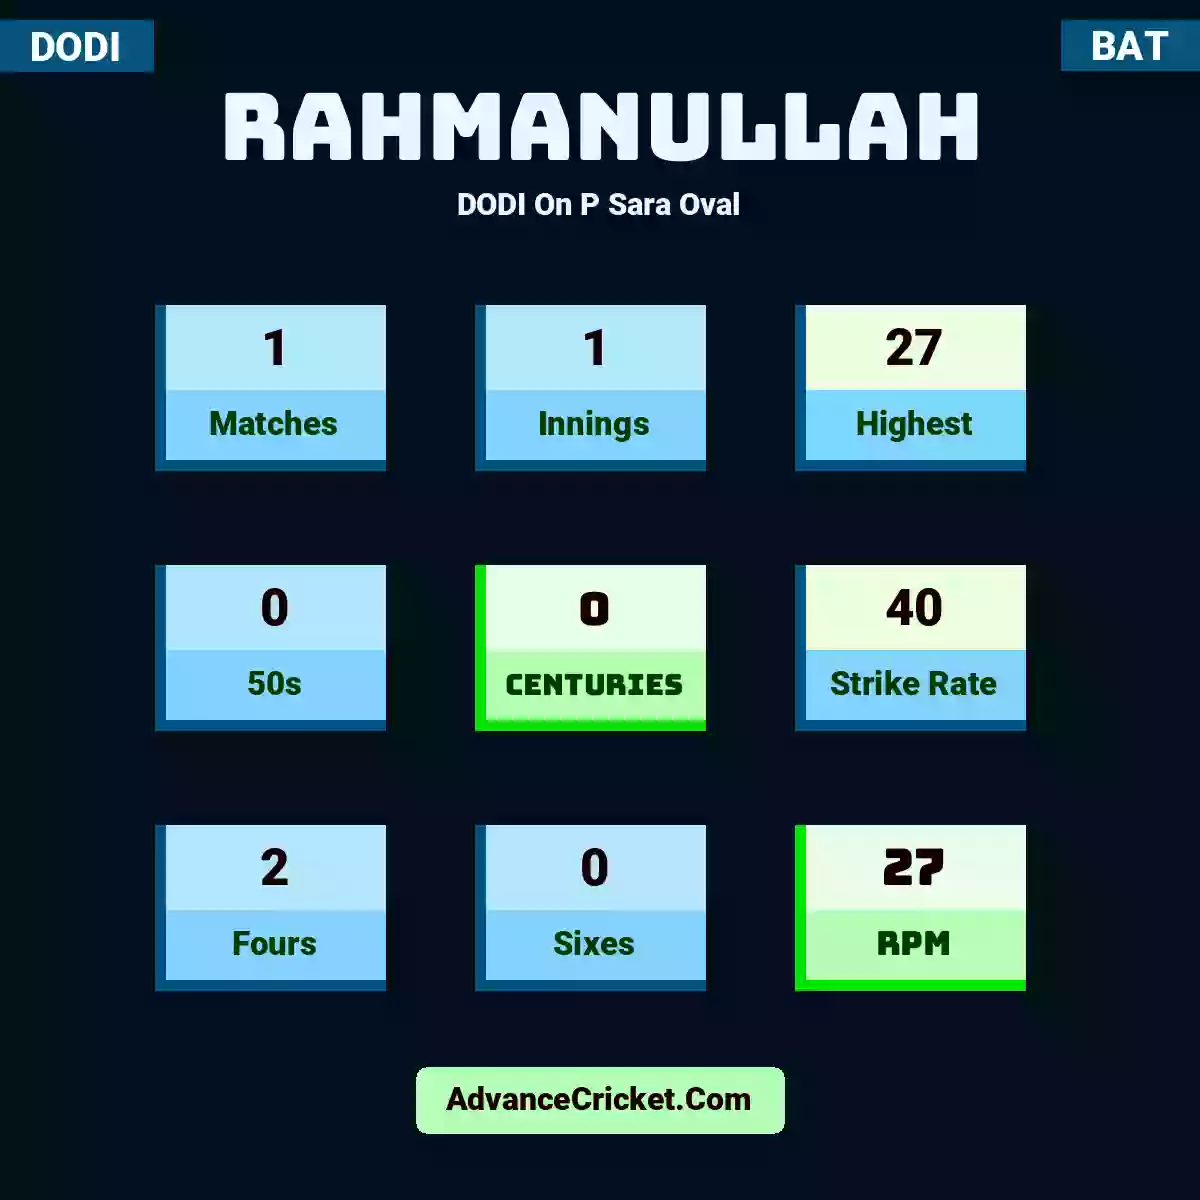 Rahmanullah DODI  On P Sara Oval, Rahmanullah played 1 matches, scored 27 runs as highest, 0 half-centuries, and 0 centuries, with a strike rate of 40. R.Rahmanullah hit 2 fours and 0 sixes, with an RPM of 27.